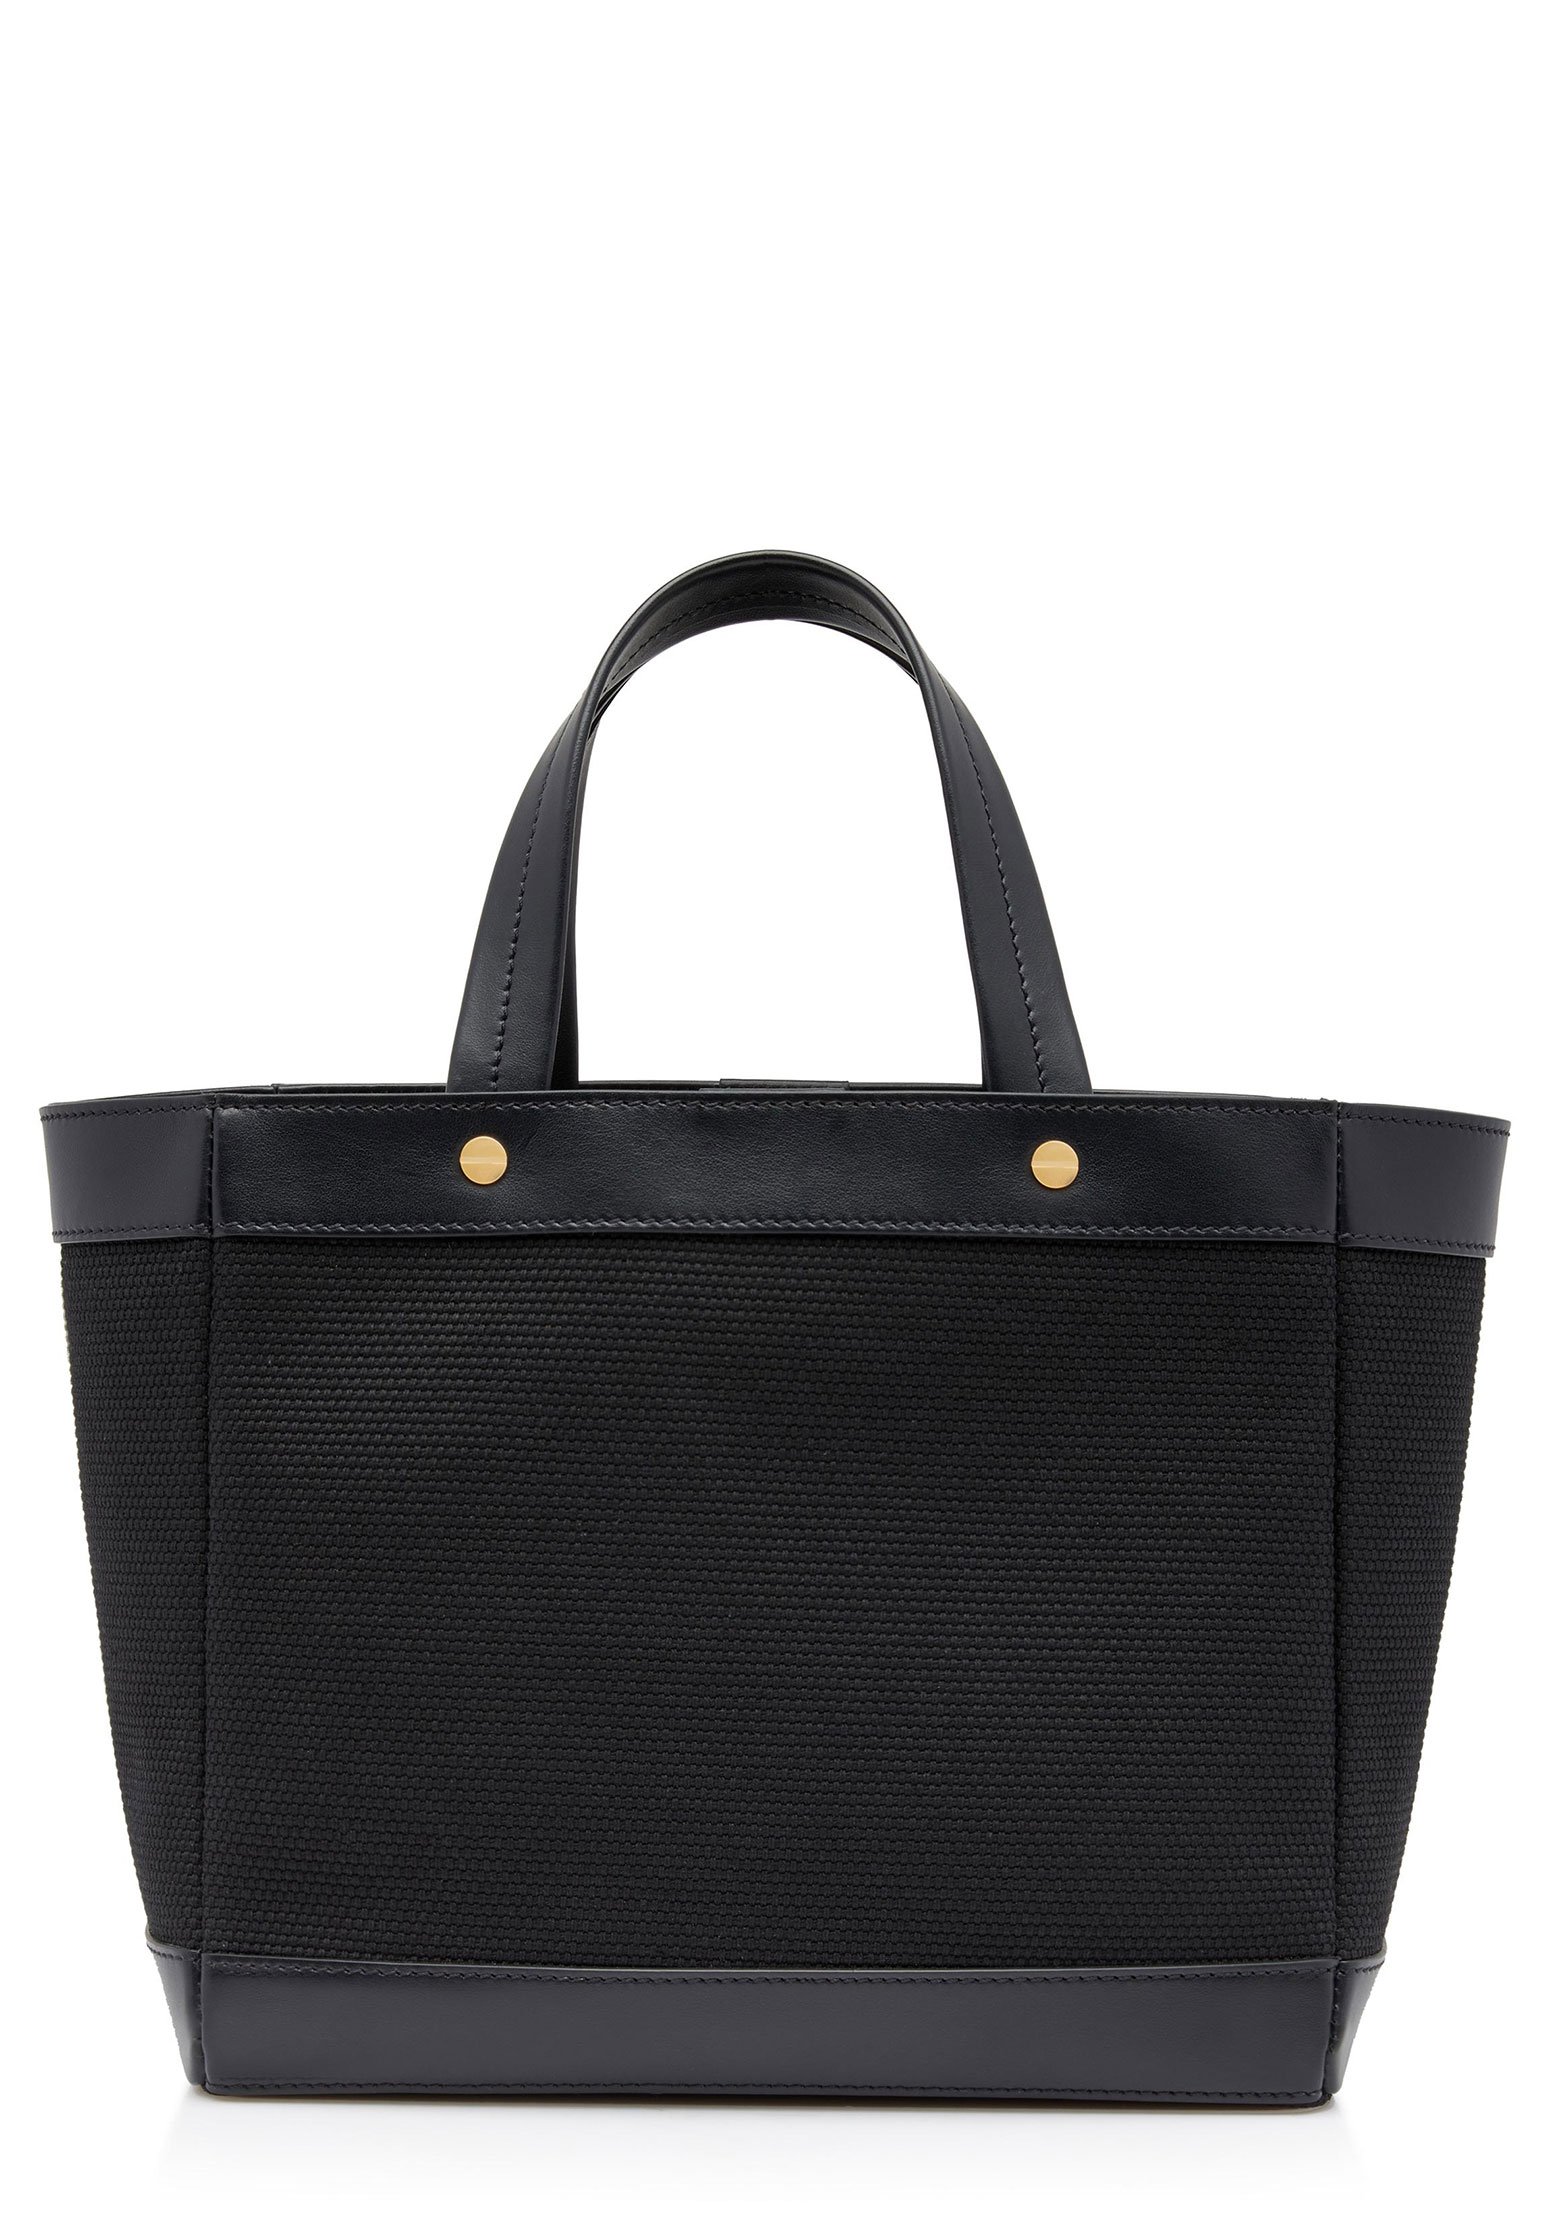 Tote bag TOM FORD Color: black (Code: 240) in online store Allure